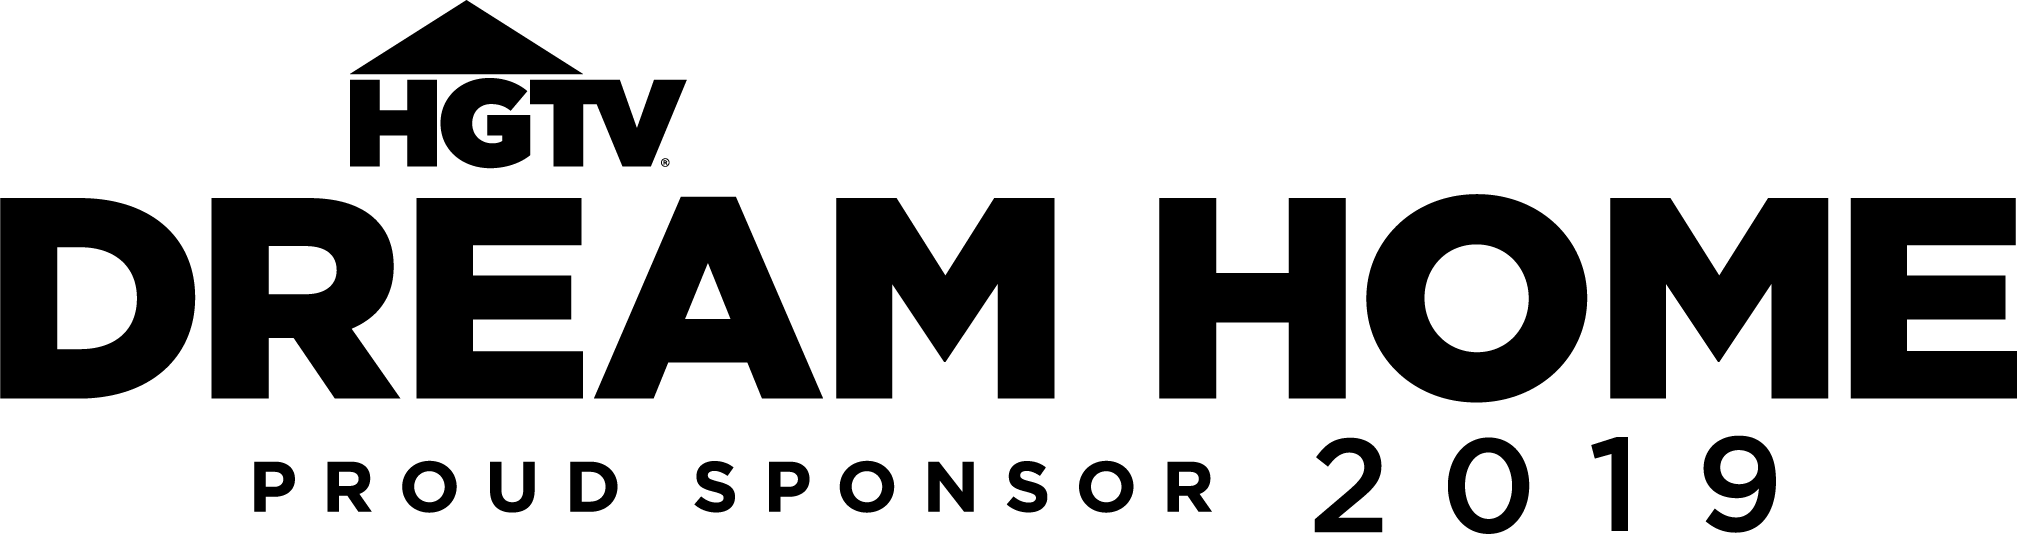 Hgtv.com Logo - HGTV Dream Home 2019: Delta Faucet Products Featured | Delta Faucet